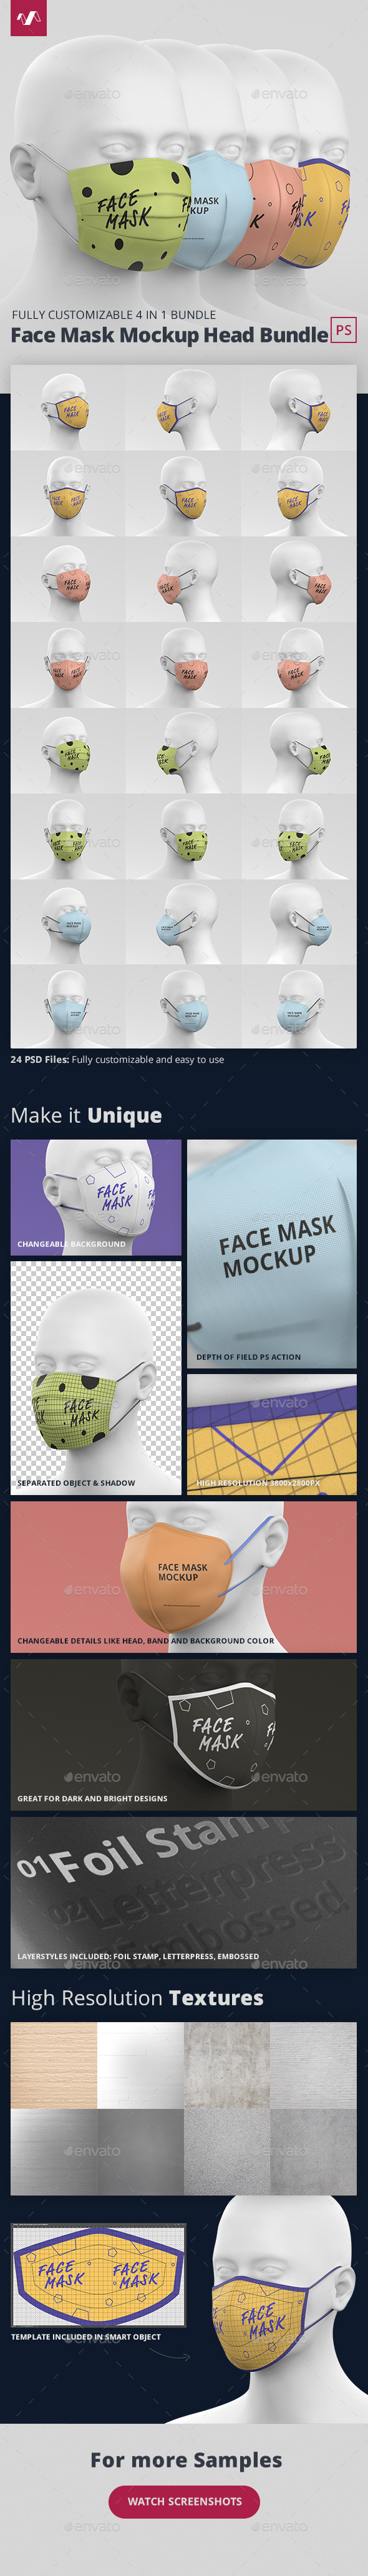 Face Mask Mockup Heads Bundle